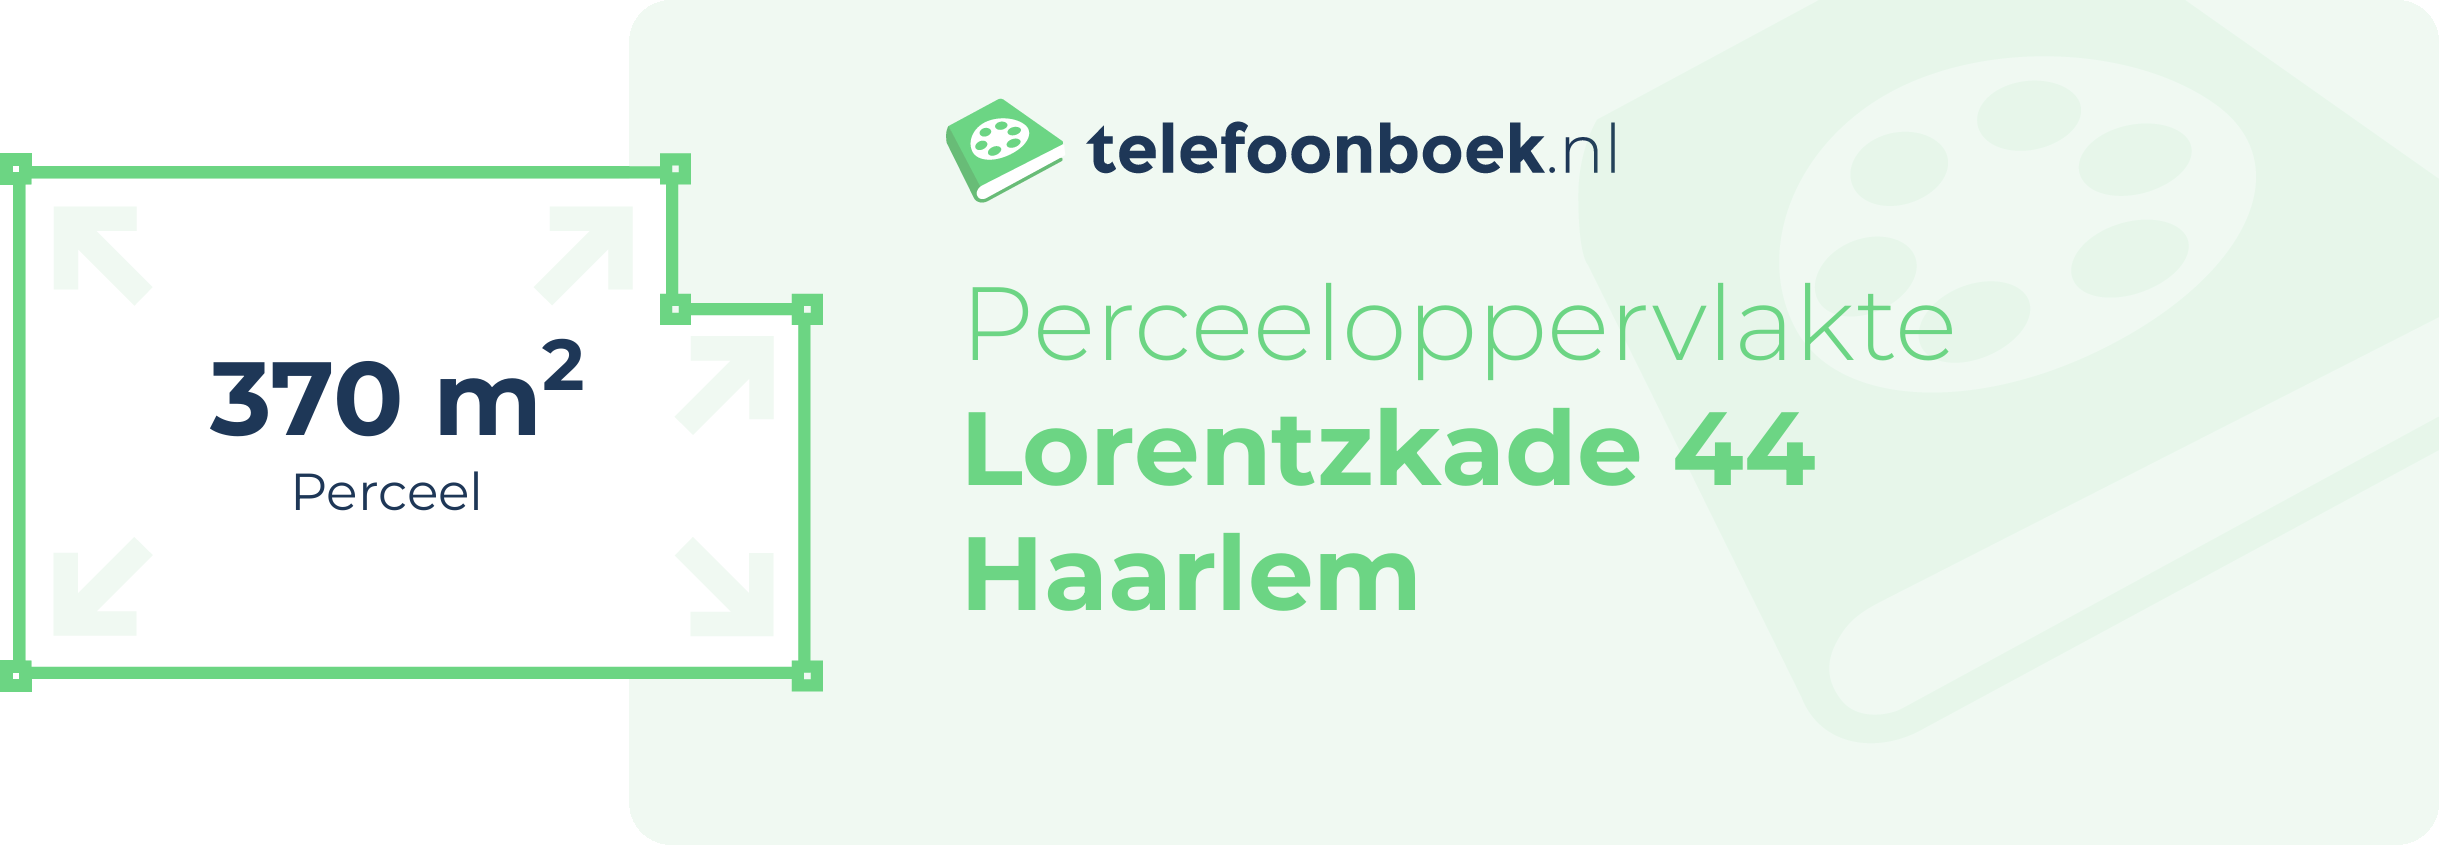 Perceeloppervlakte Lorentzkade 44 Haarlem